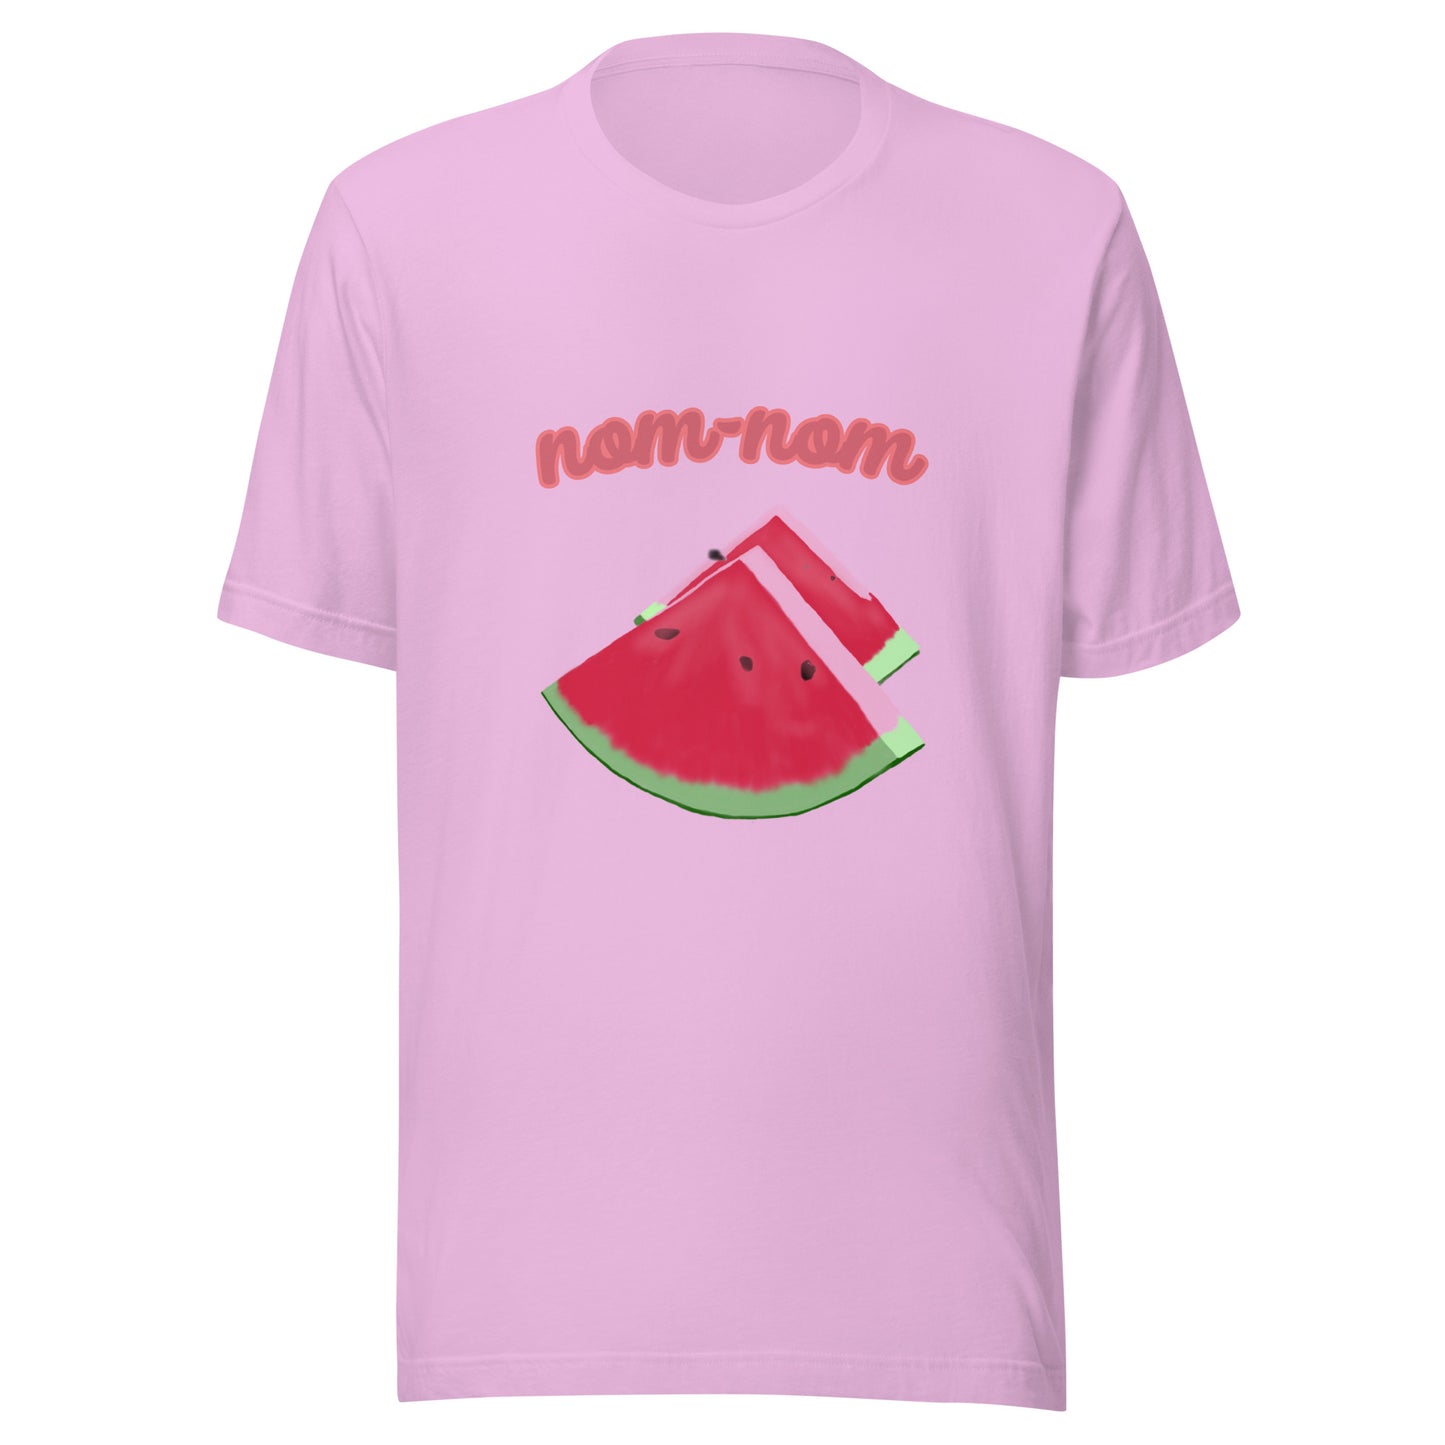 nom-nom Watermelon Unisex t-shirt